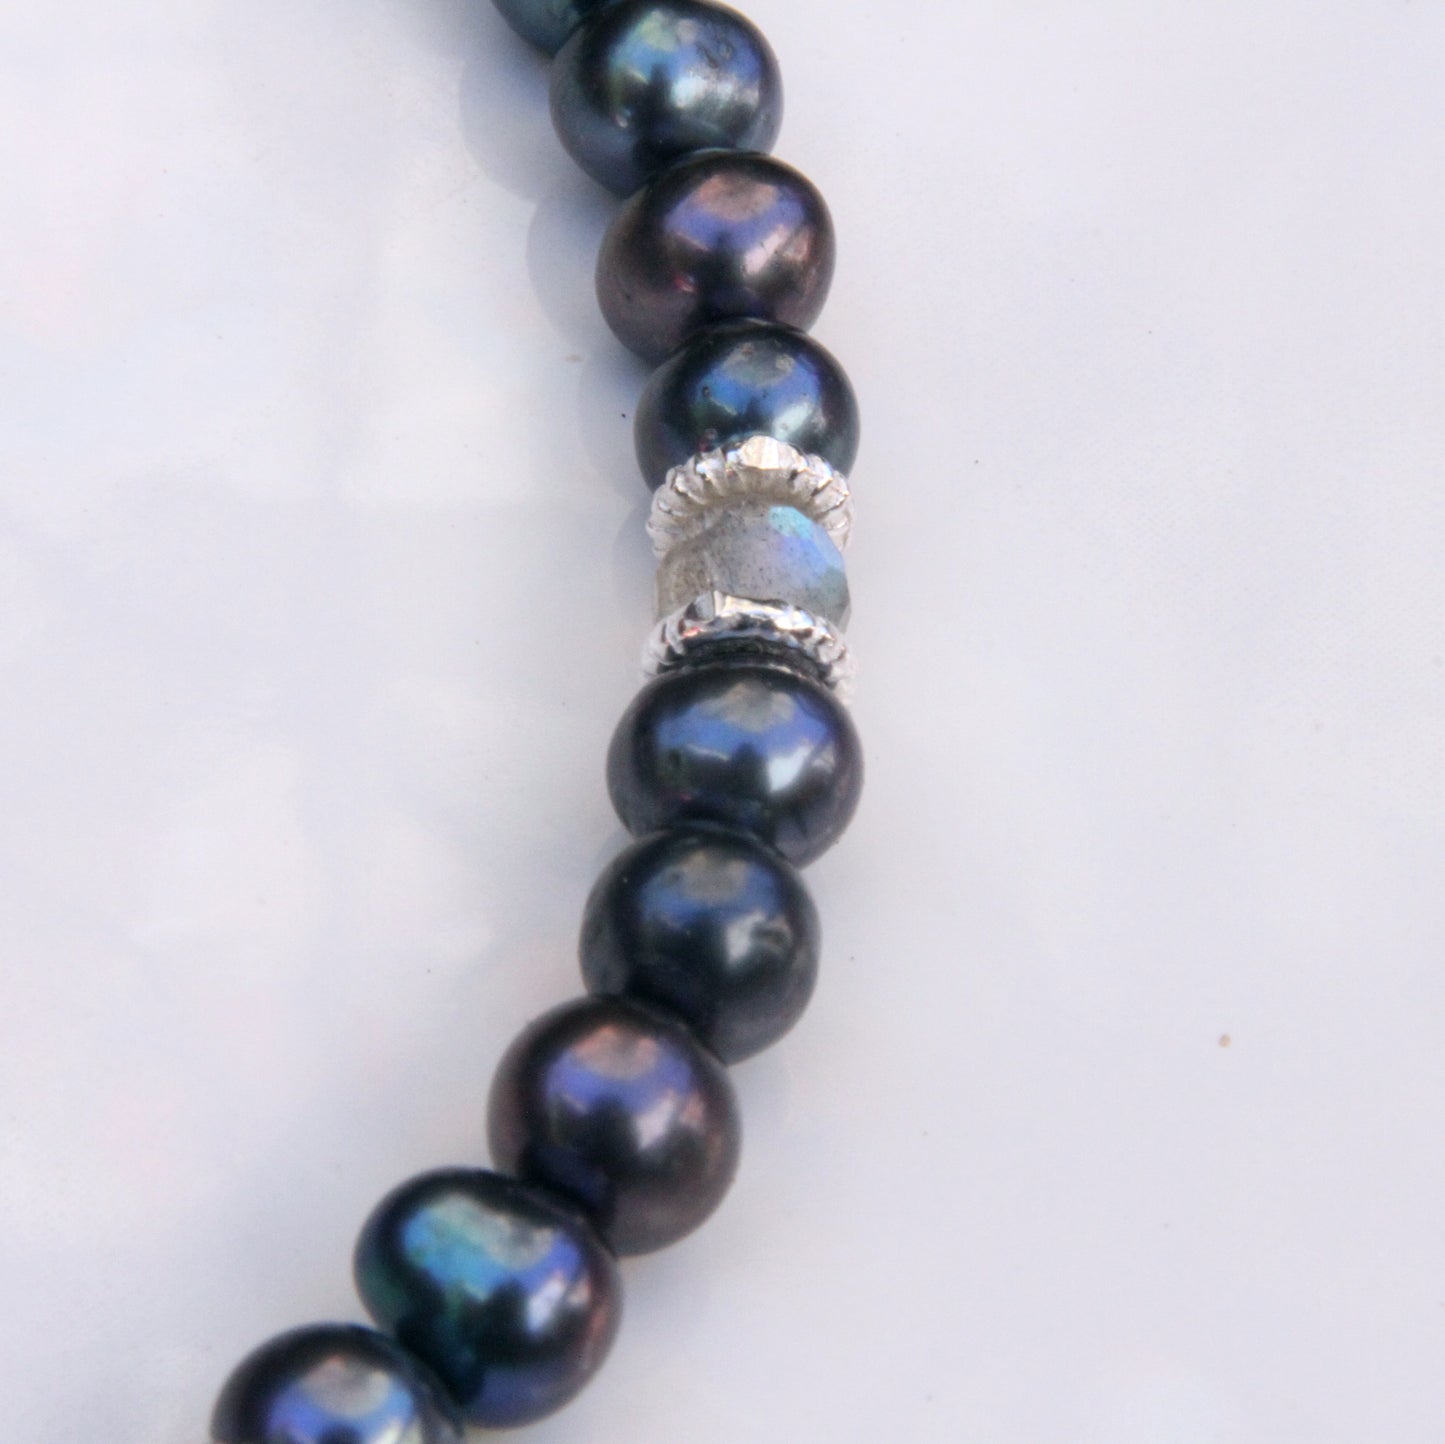 Natural Freshwater Black & Blue Pearls, Labradorite gemstones, and Sterling Silver Choker